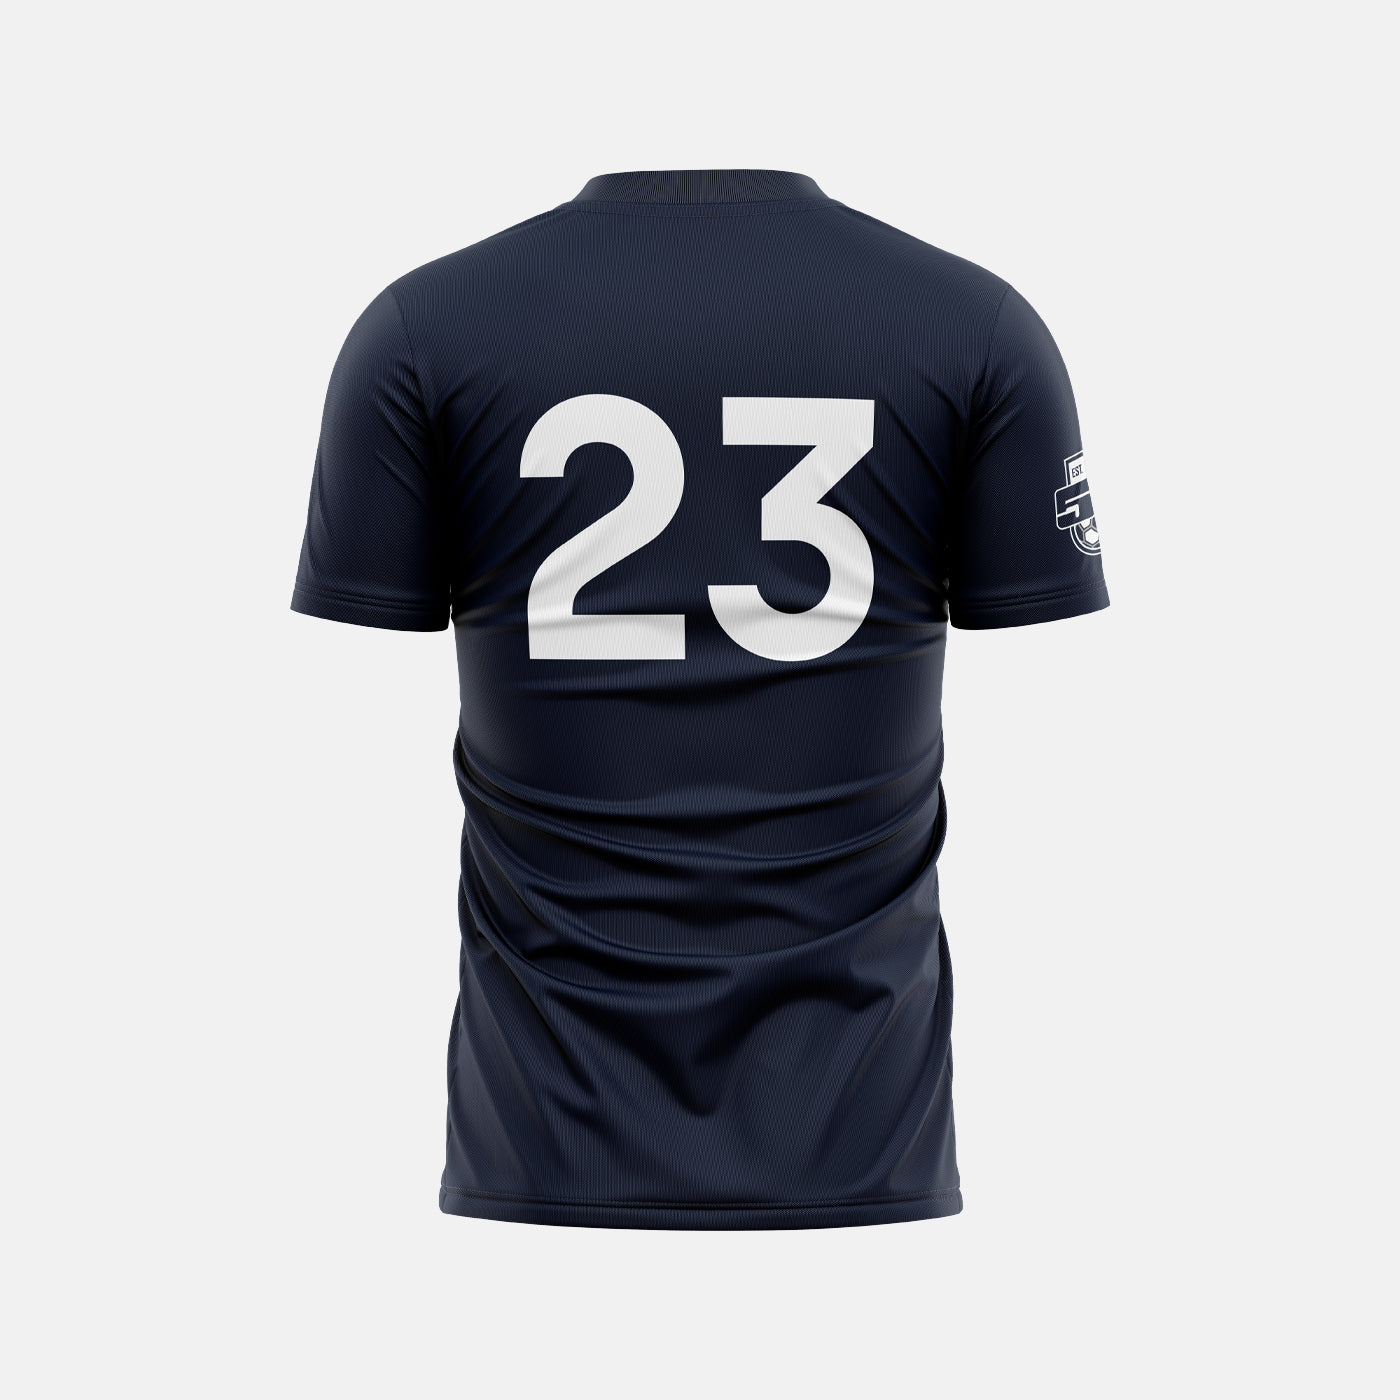 Douglas Freeman Soccer - Classic Field Player’s Shirt